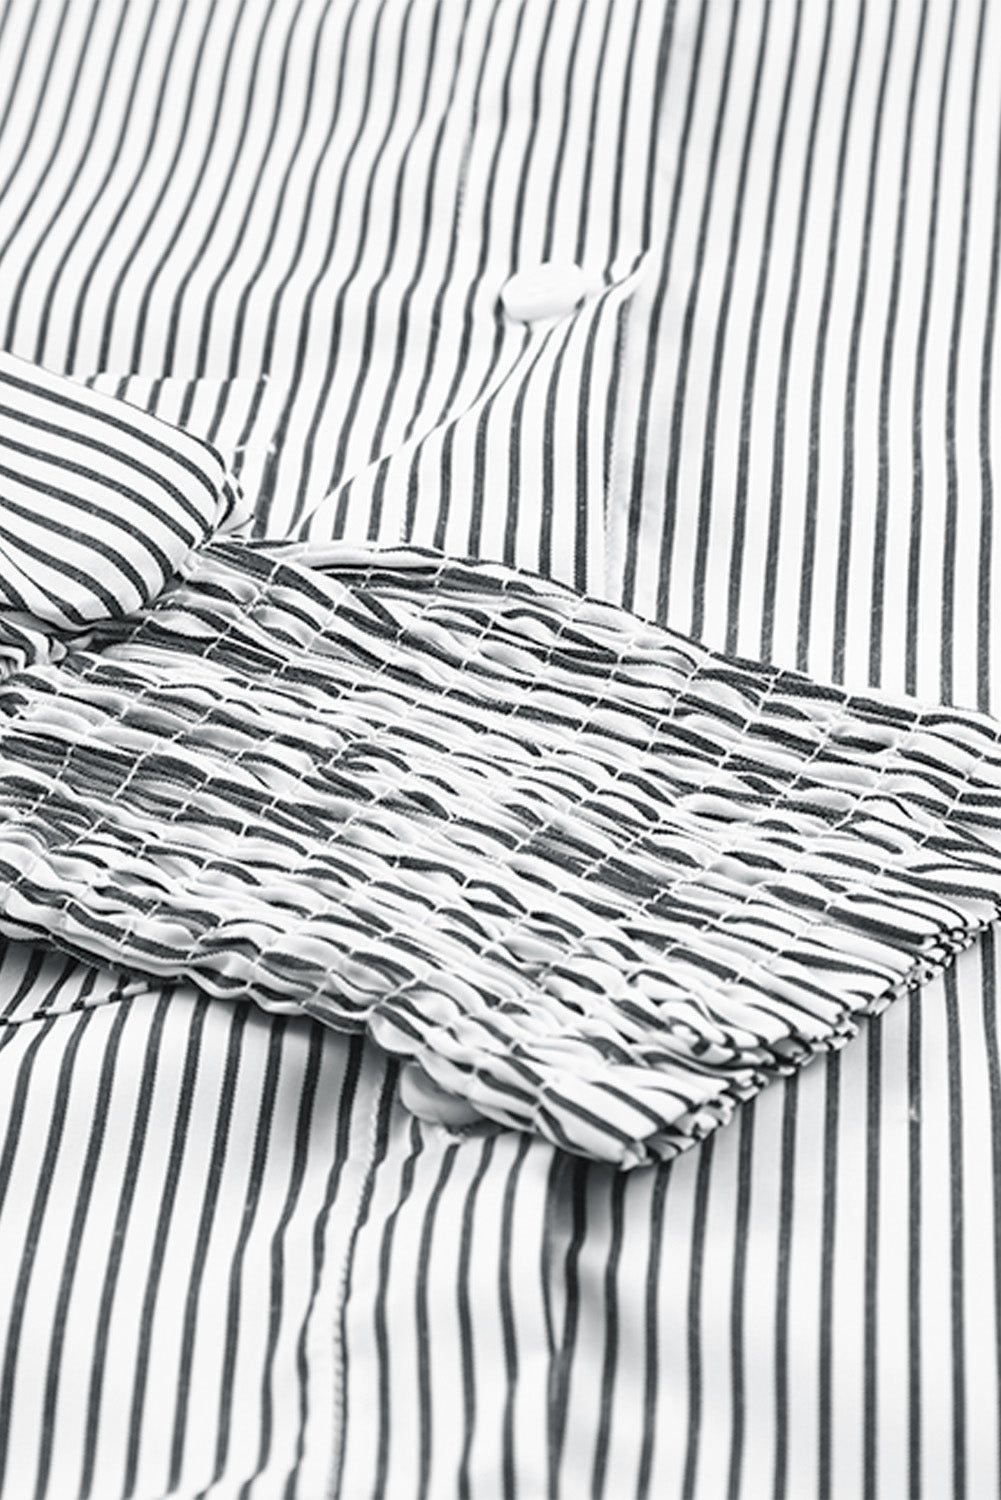 Smocked Cuffed Striped Boyfriend Shirt With Pocket